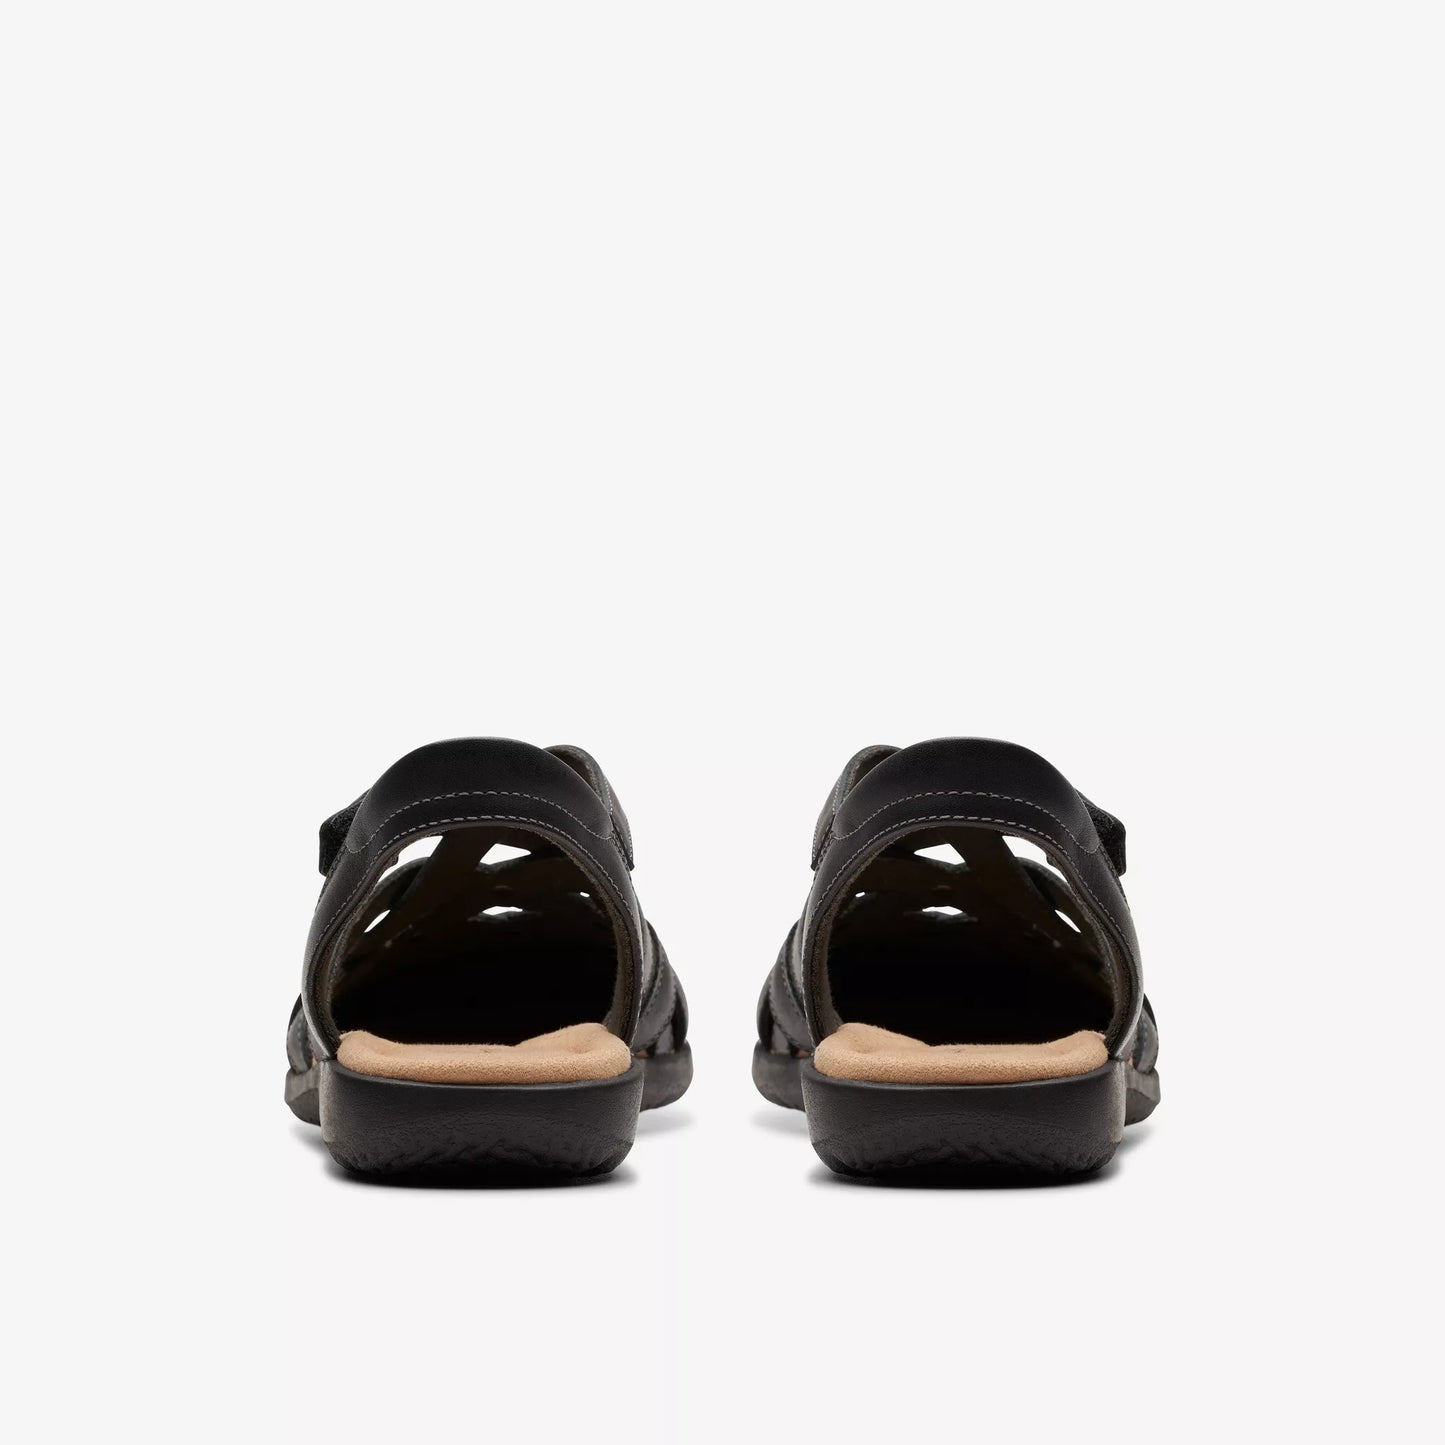 Clarks Women's Elizabelle Sea Sandals - Black Leather